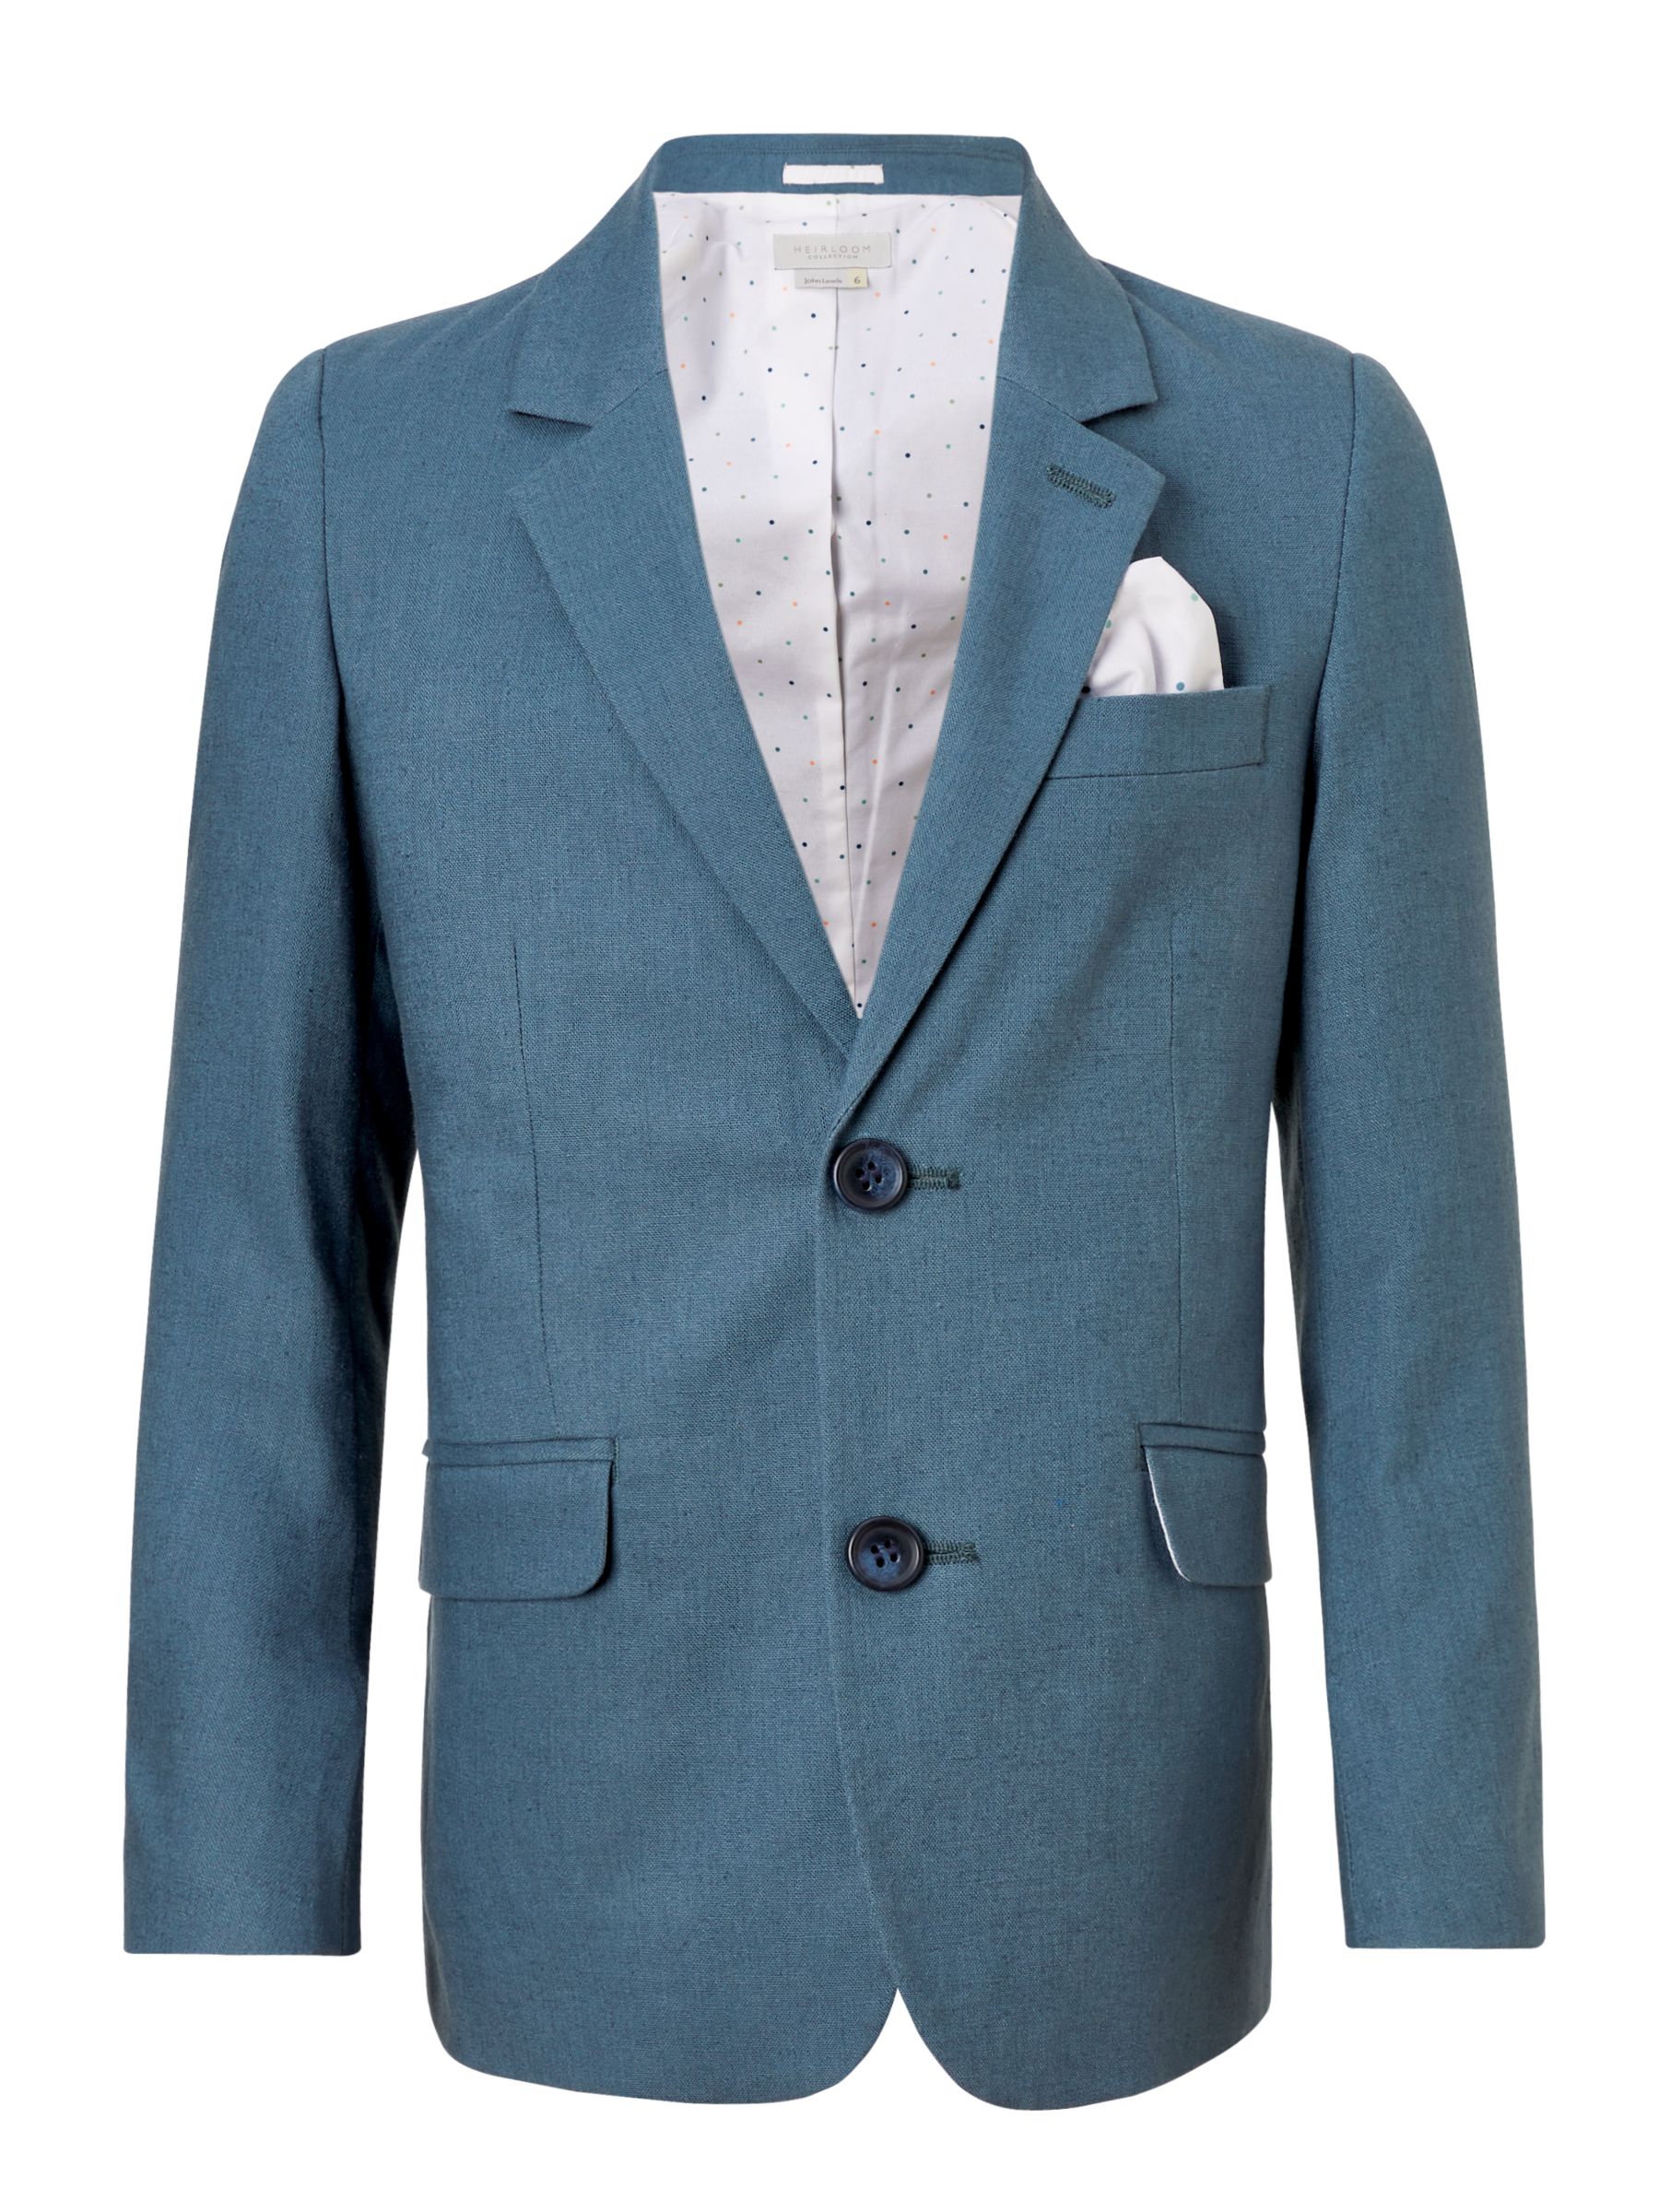 John Lewis & Partners Heirloom Collection Boys' Linen Suit Jacket, Lagoon